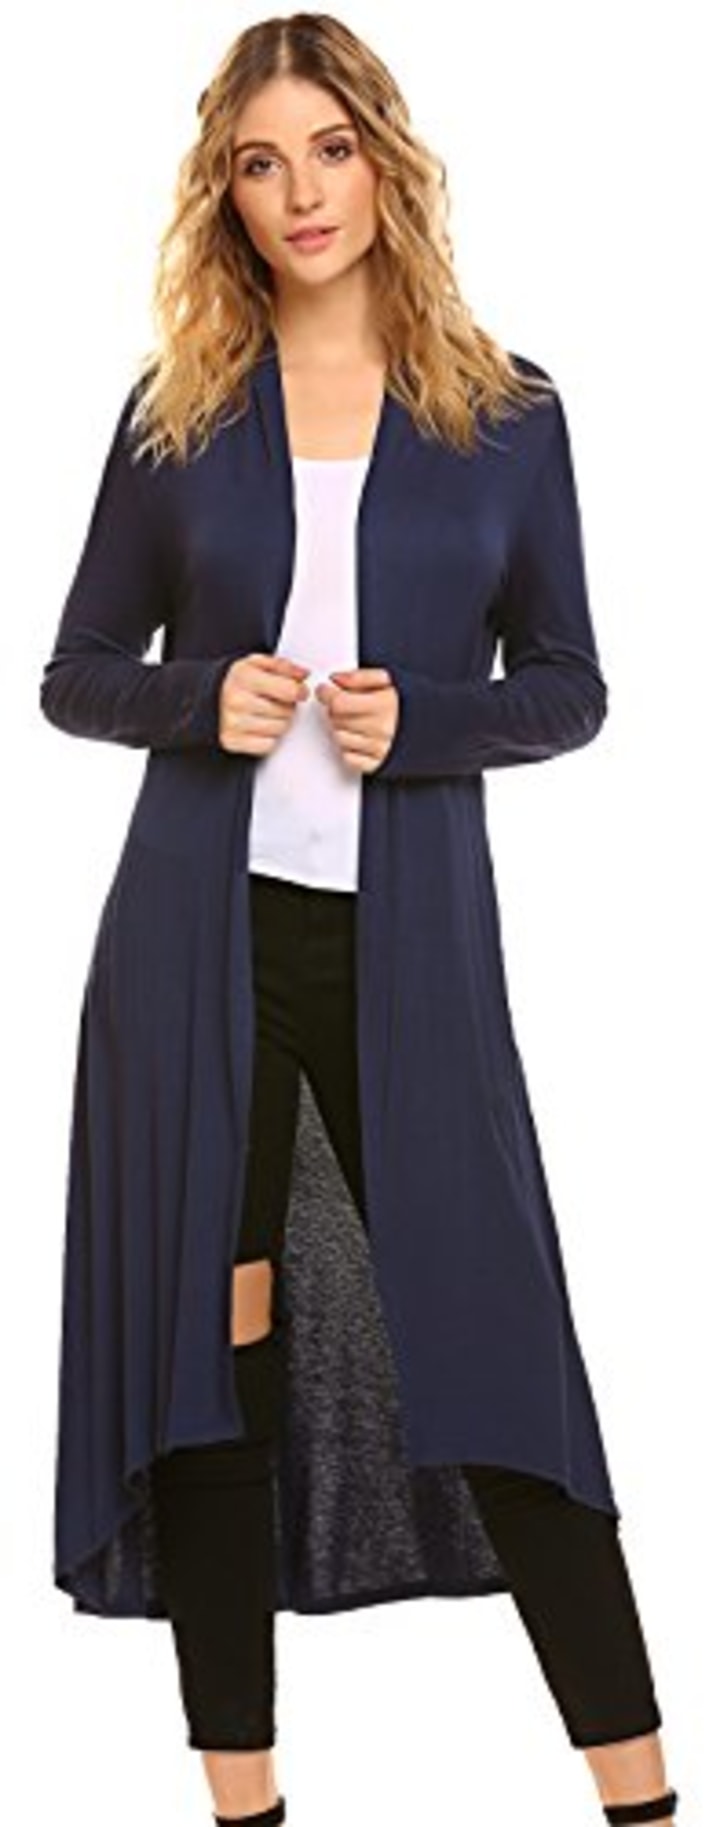 POGTMM Women&#039;s Long Open Front Drape Lightweight Maix Long Sleeve Cardigan Sweater (US S (4-6), Navy Blue)